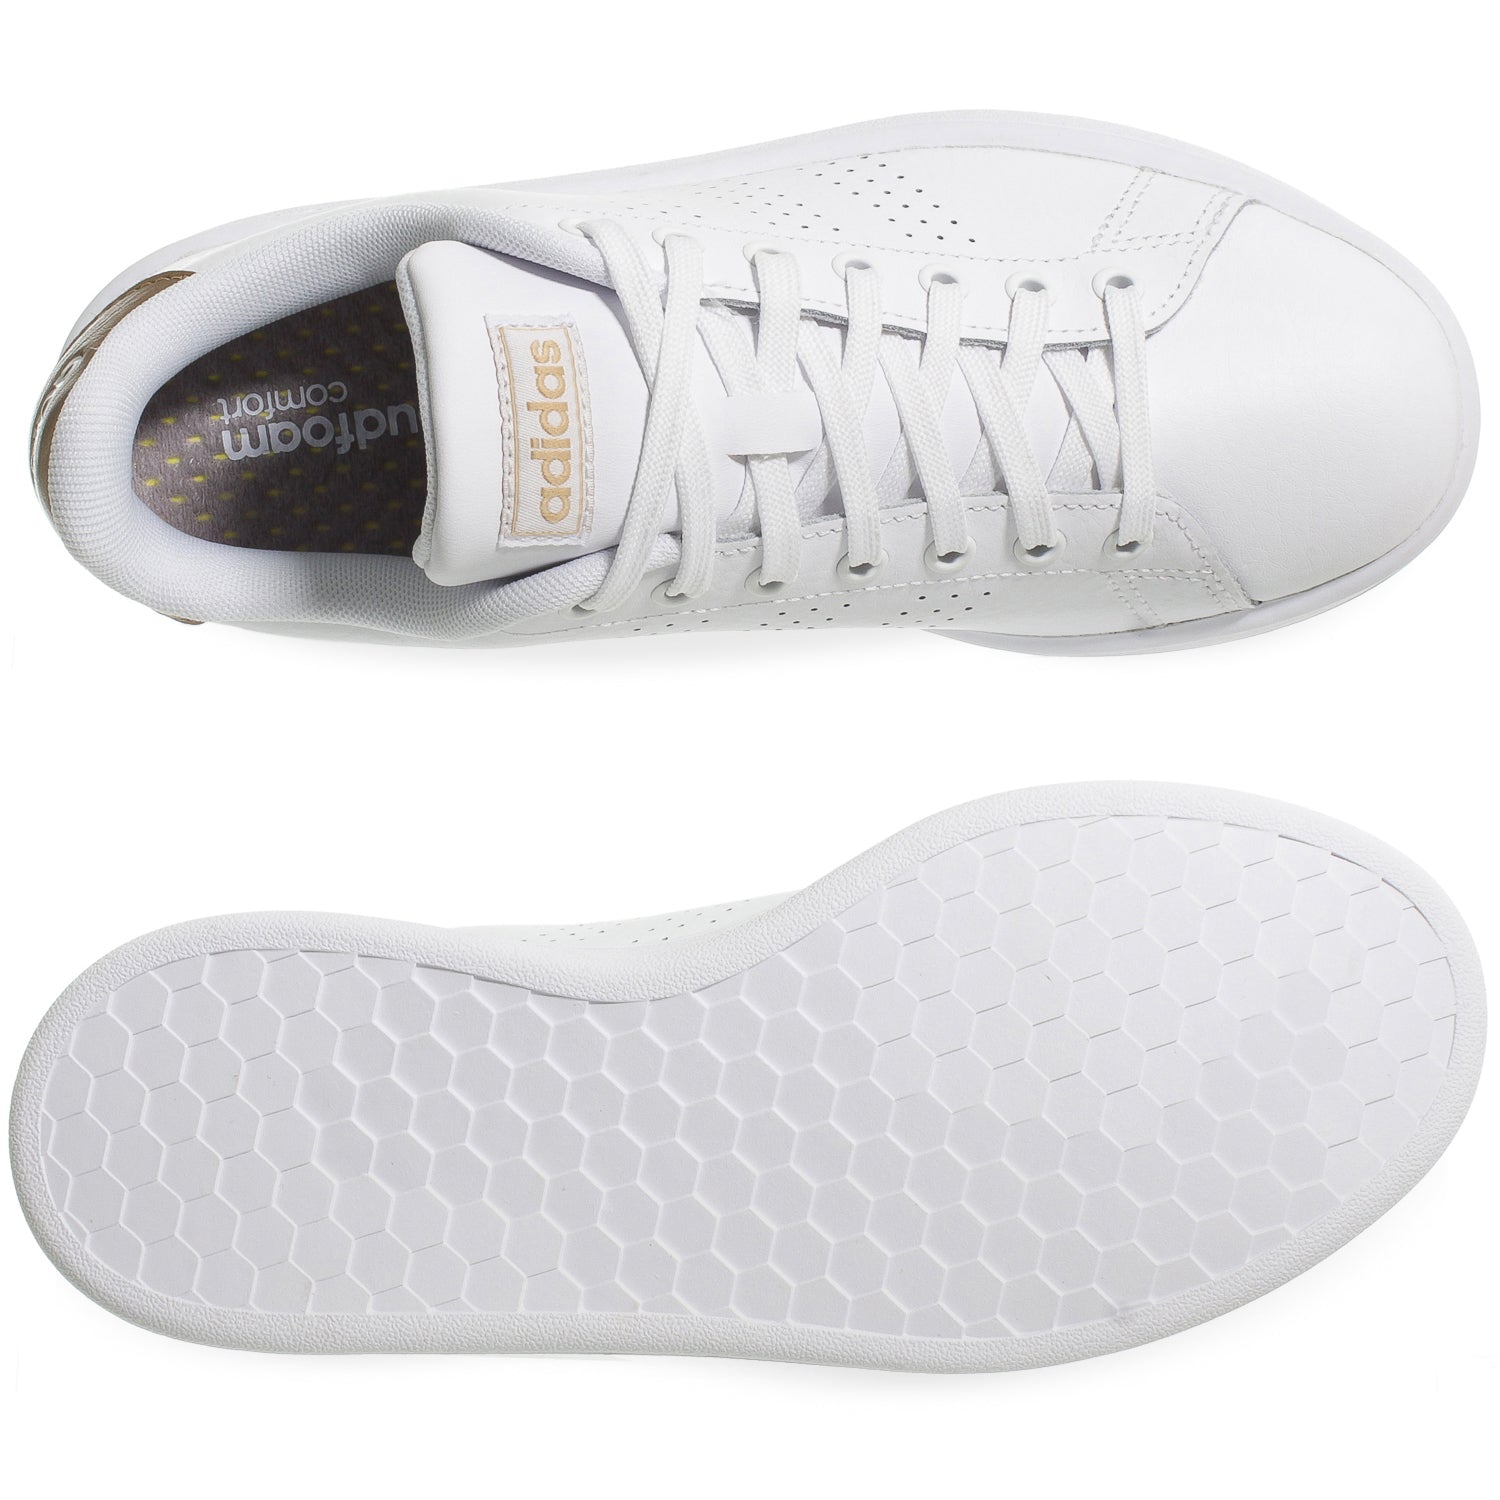 Tenis Adidas Advantage W F36223 - Blanco Mujer | Shoelander.com - Footwear Retail